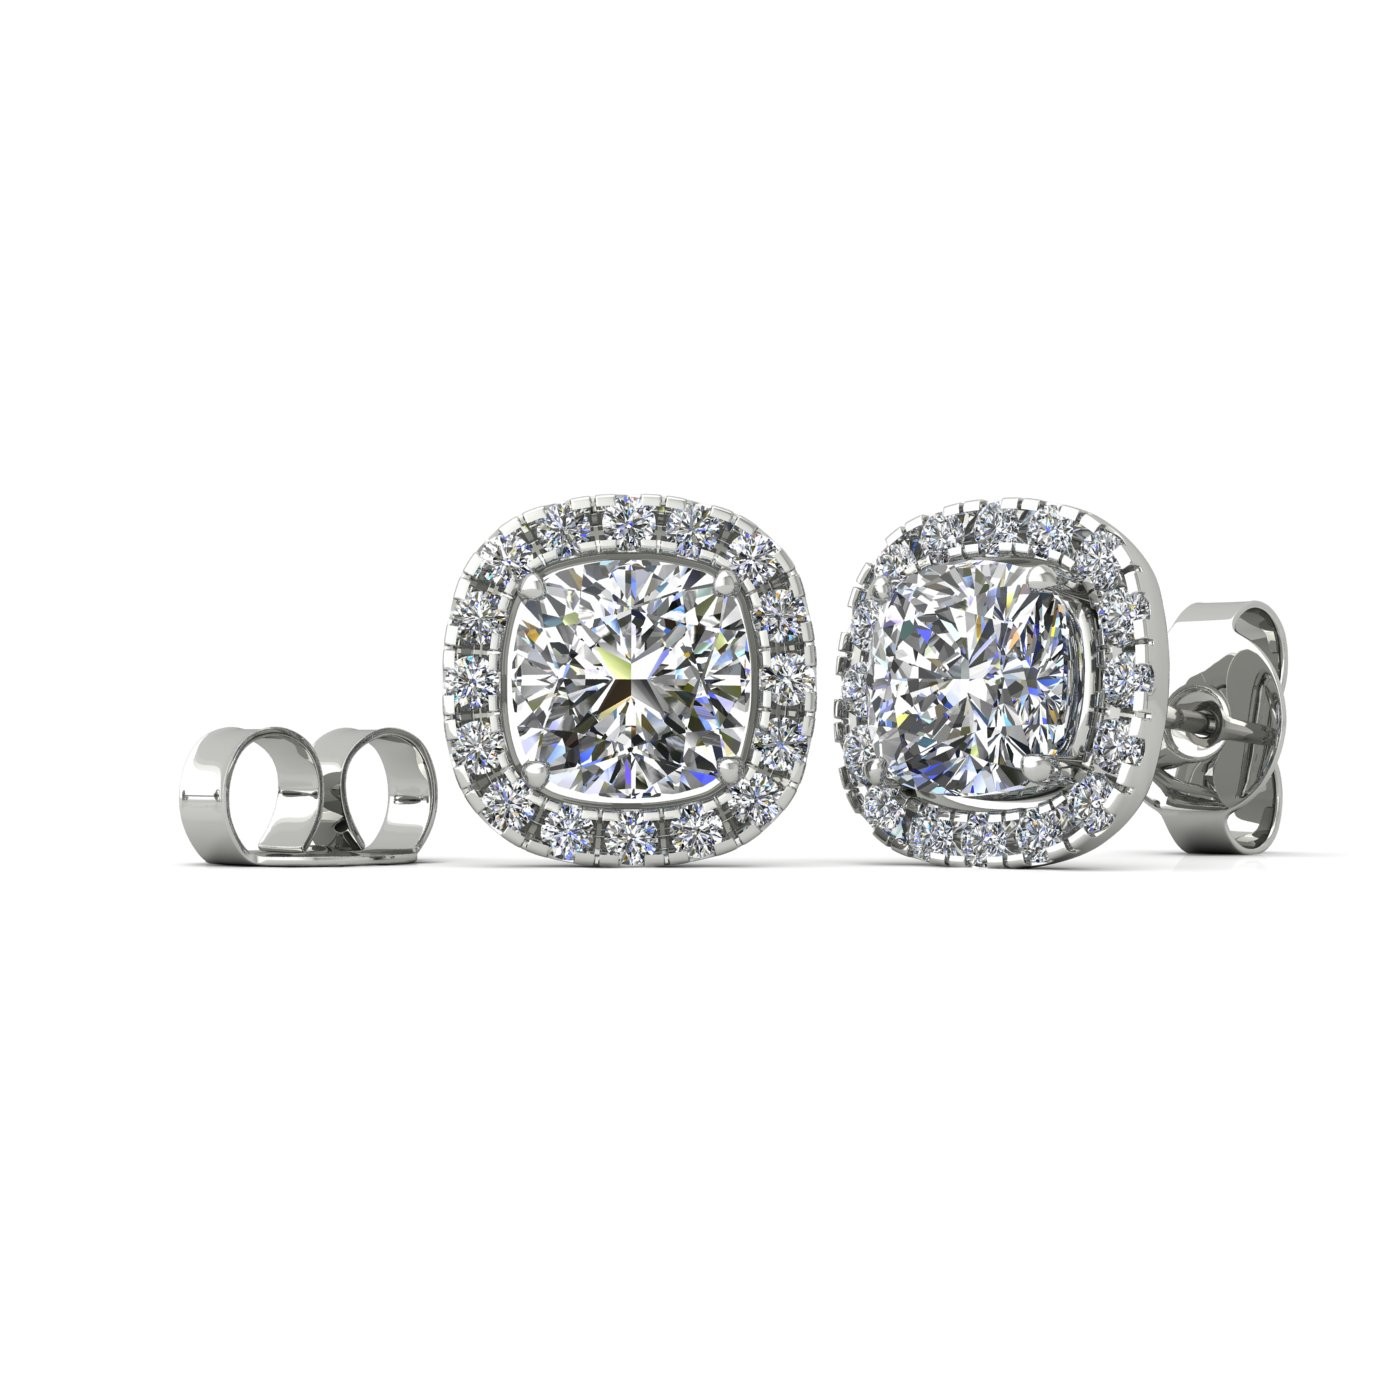 18k white gold  2,0 ct each (4,0 tcw) 4 prongs cushion shape diamond earrings with diamond pavÉ set halo Photos & images